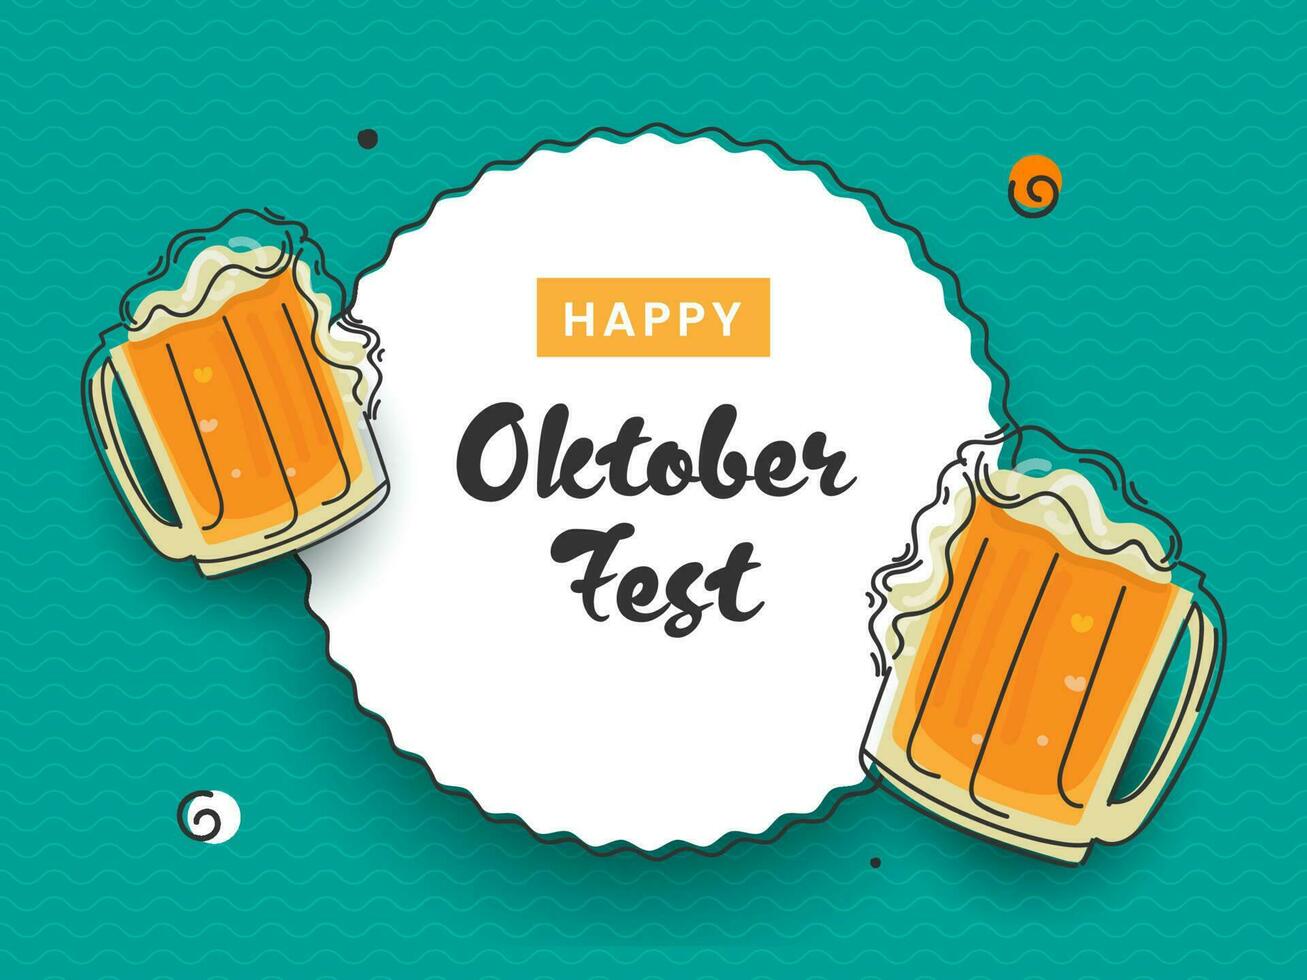 contento Oktoberfest fuente terminado circular marco con garabatear estilo cerveza tazas en turquesa ondulado líneas antecedentes. vector